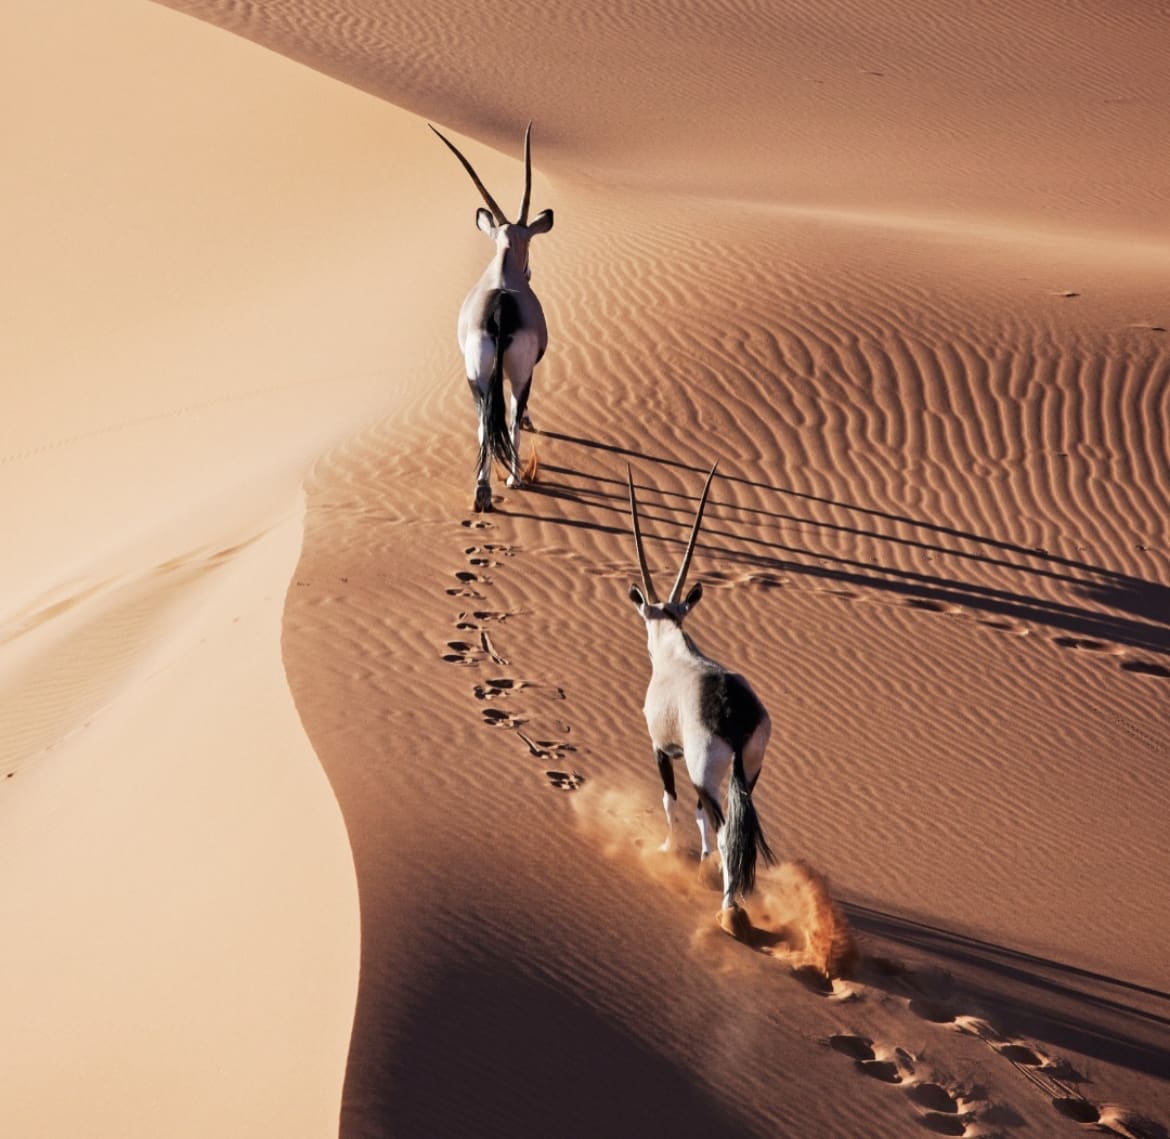 Oryx in the desert